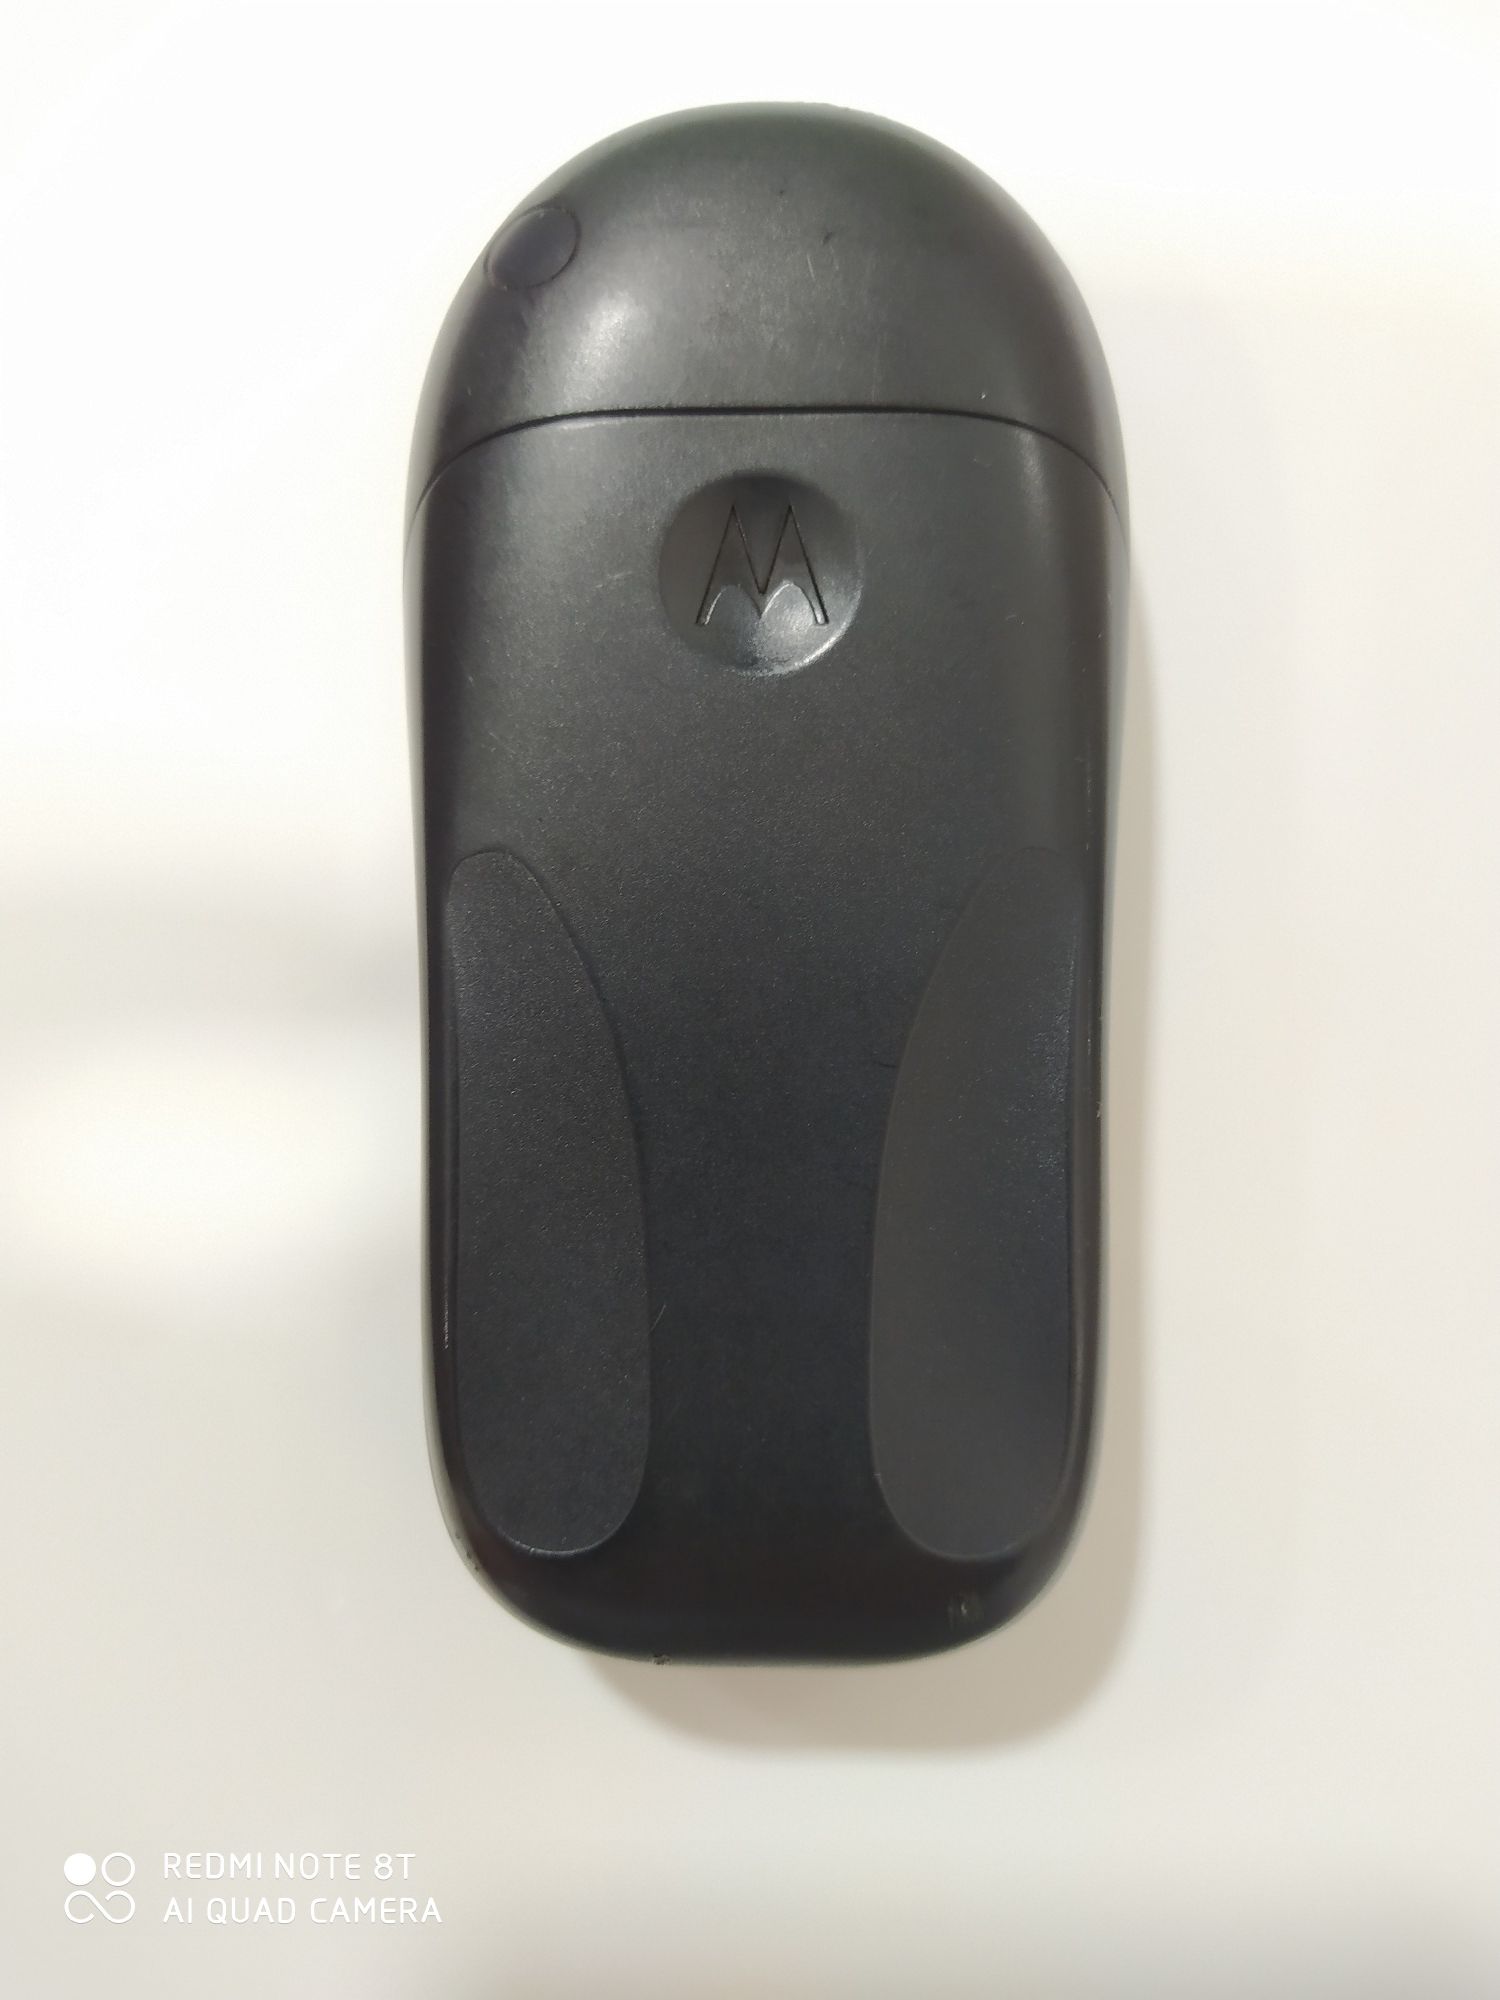 Telemóvel Motorola C115